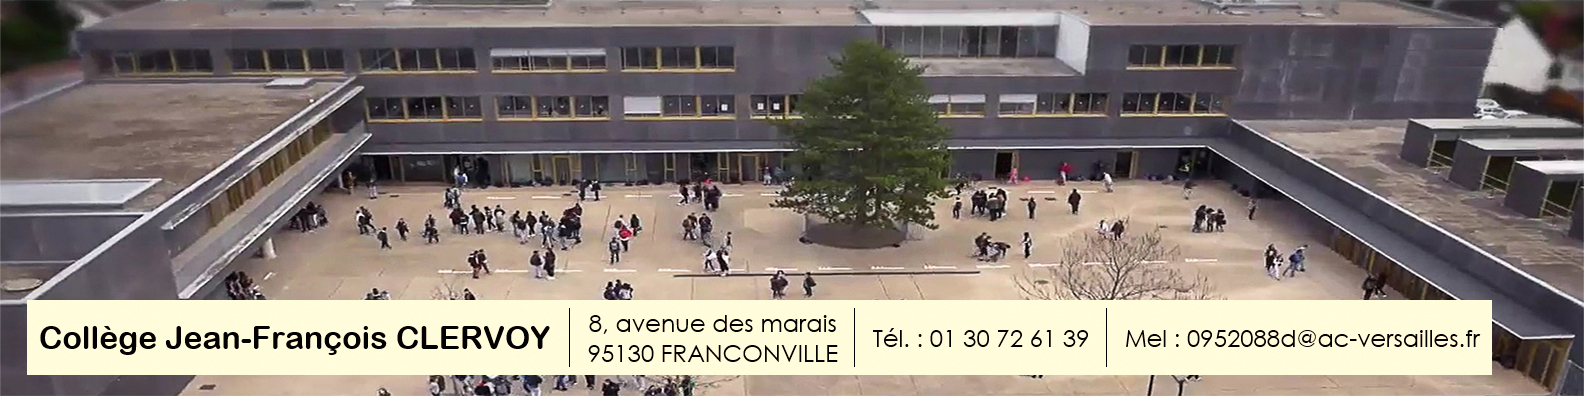 Collège Clervoy de Franconville